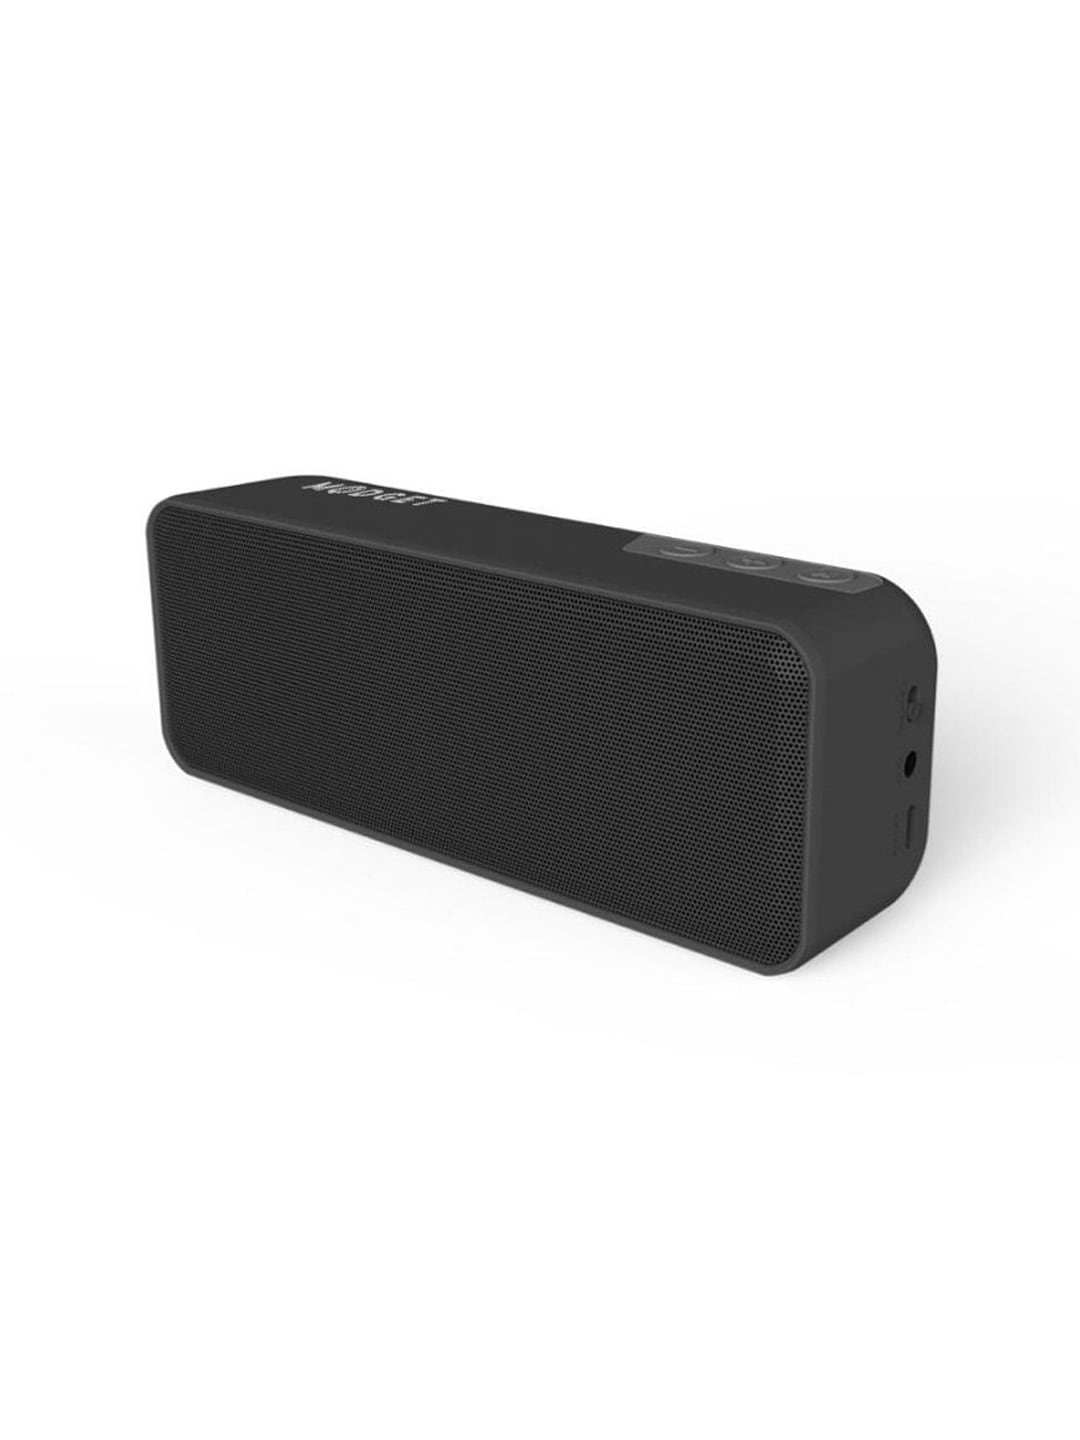 MODGET Black Solid MOG X3 10W Bluetooth Speaker Price in India